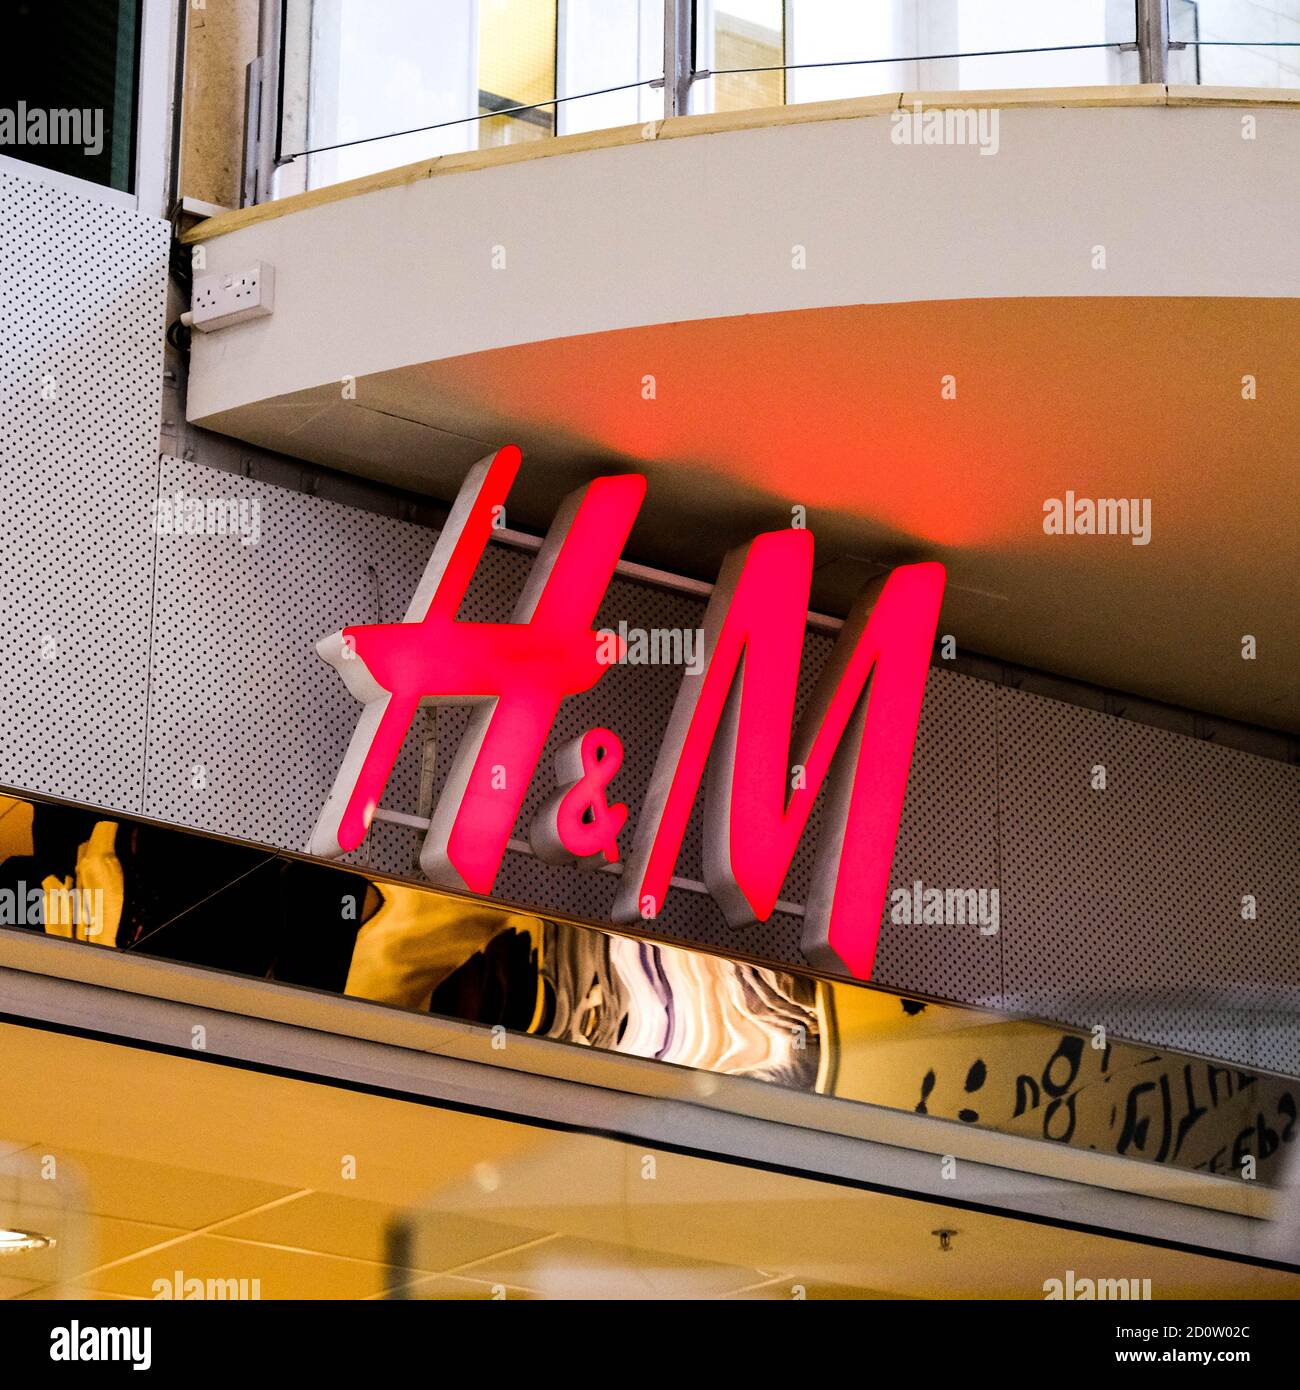 Londra UK, ottobre 03 2020, H&M High Street Fashion Clothing Retailer Company Logo senza persone Foto Stock